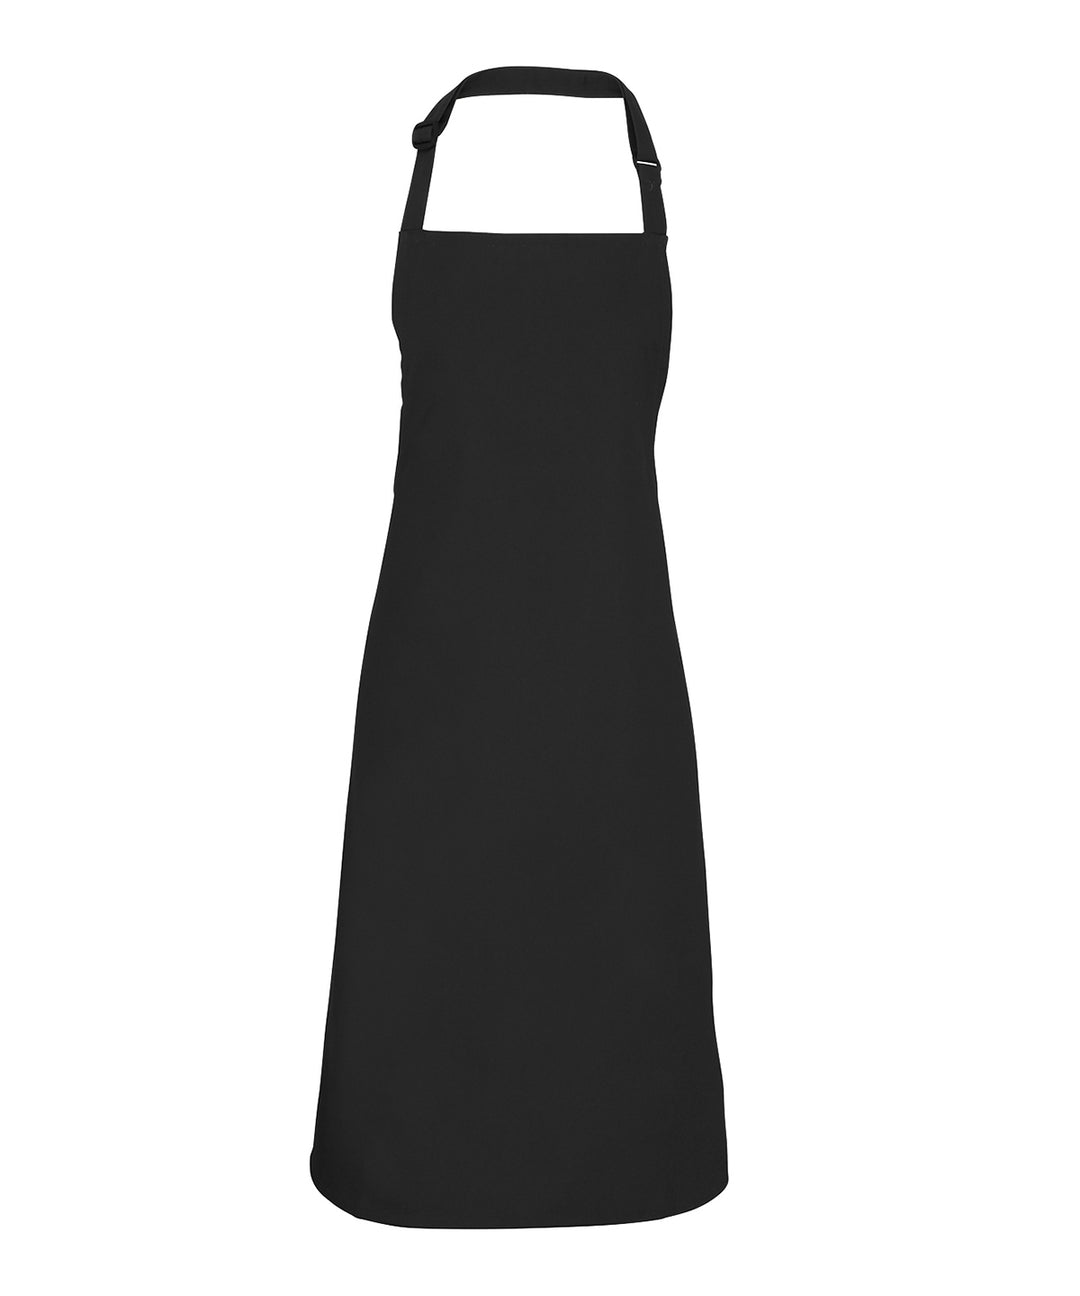 a black apron on a white background